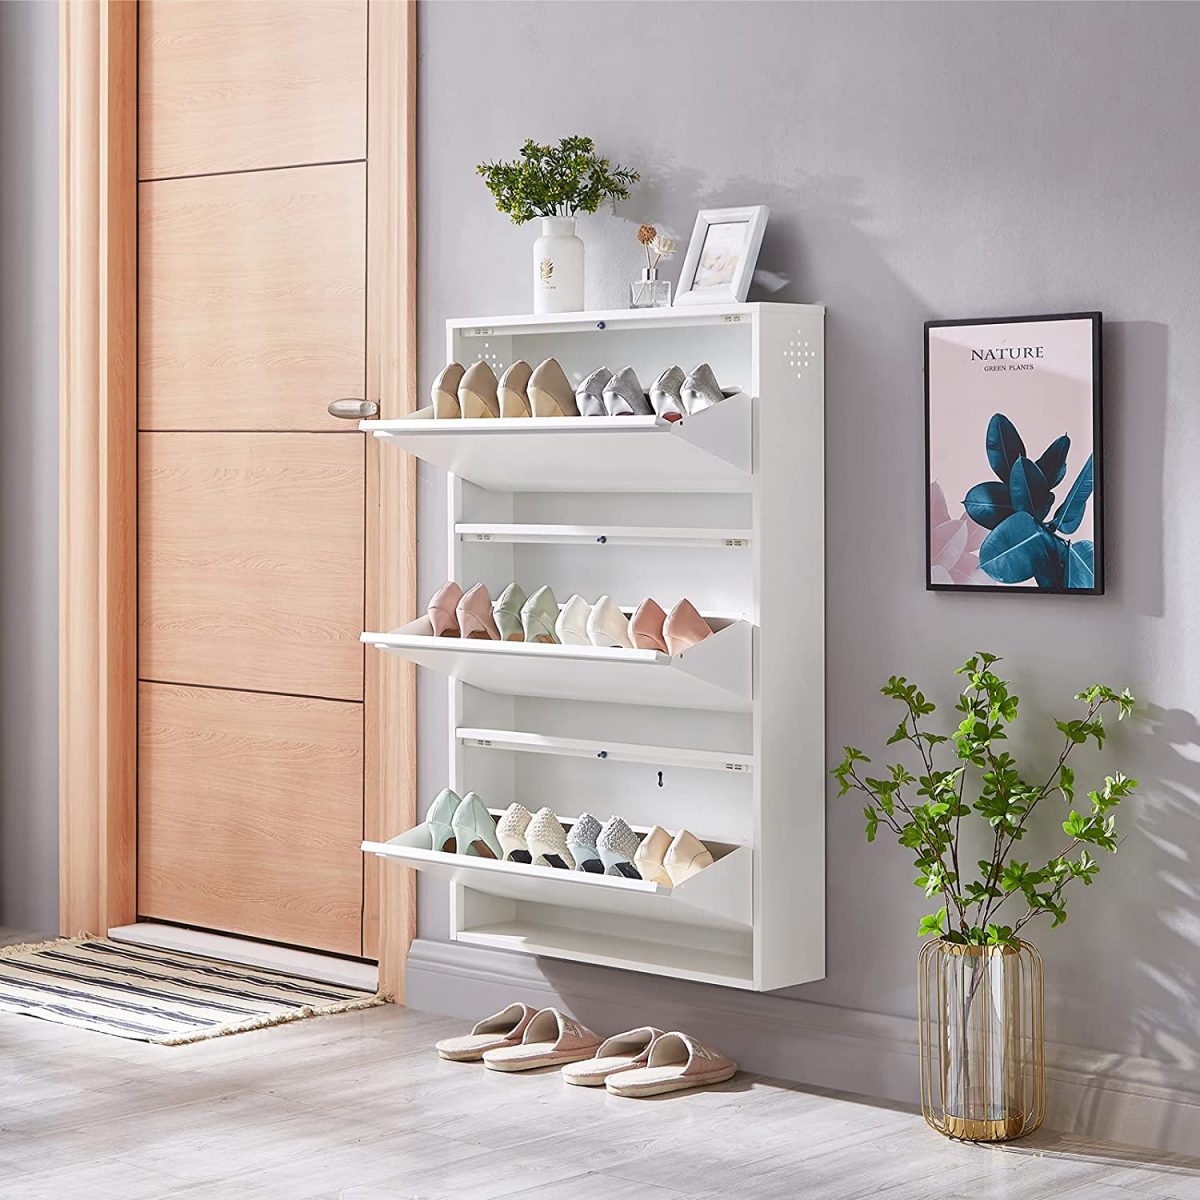 Shoe Storage Cabinet Options